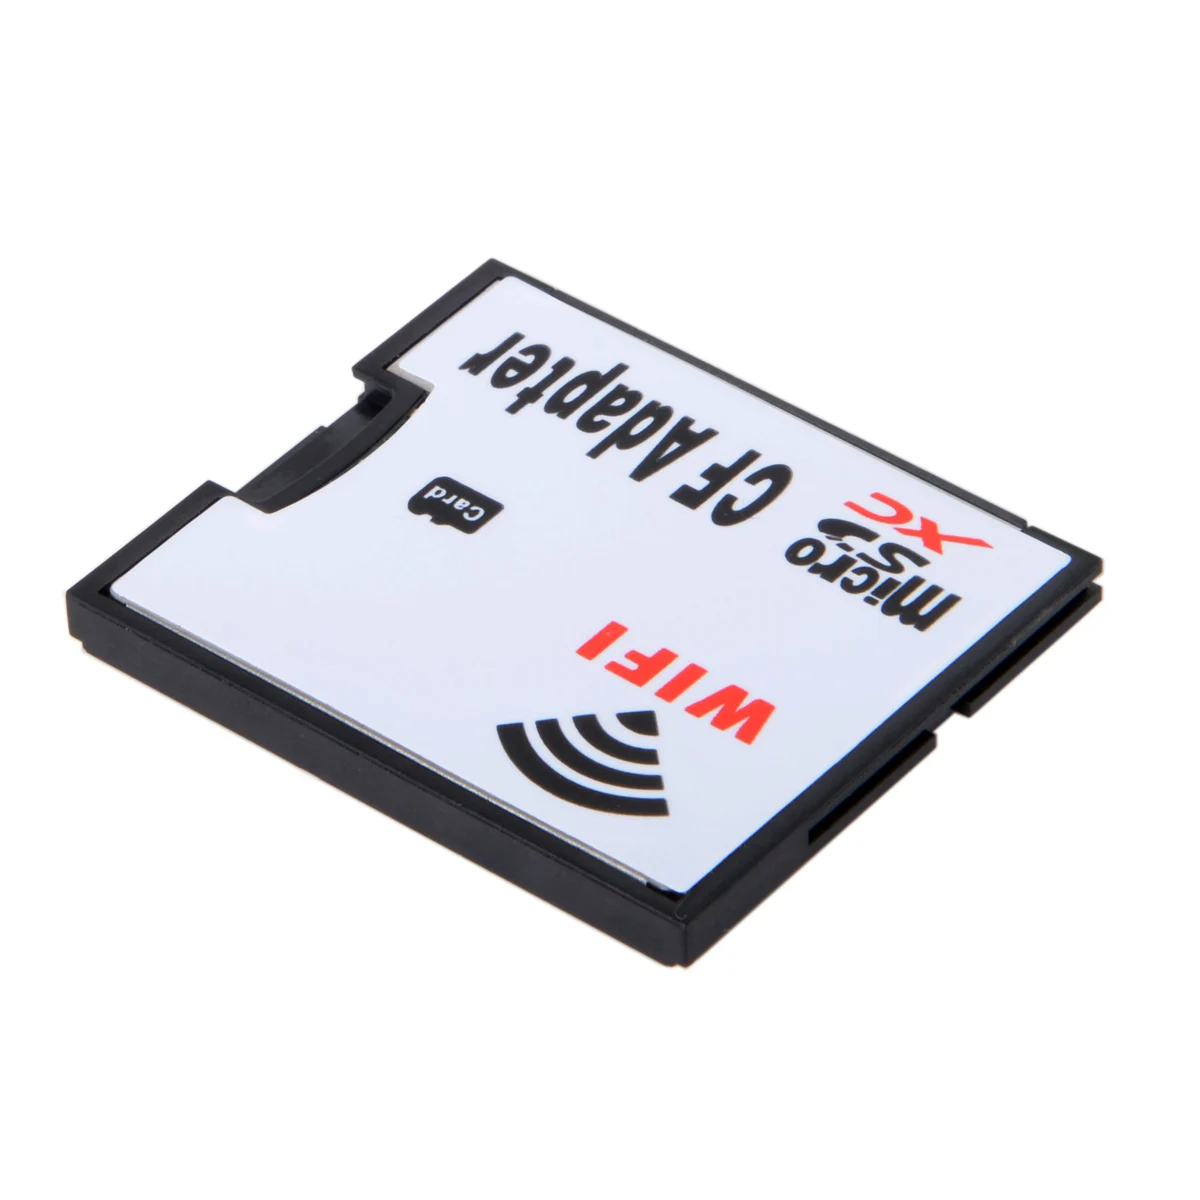 

Адаптер Wi-Fi, карта памяти TF Micro SD к CF, компактный комплект флэш-карт для цифровой камеры